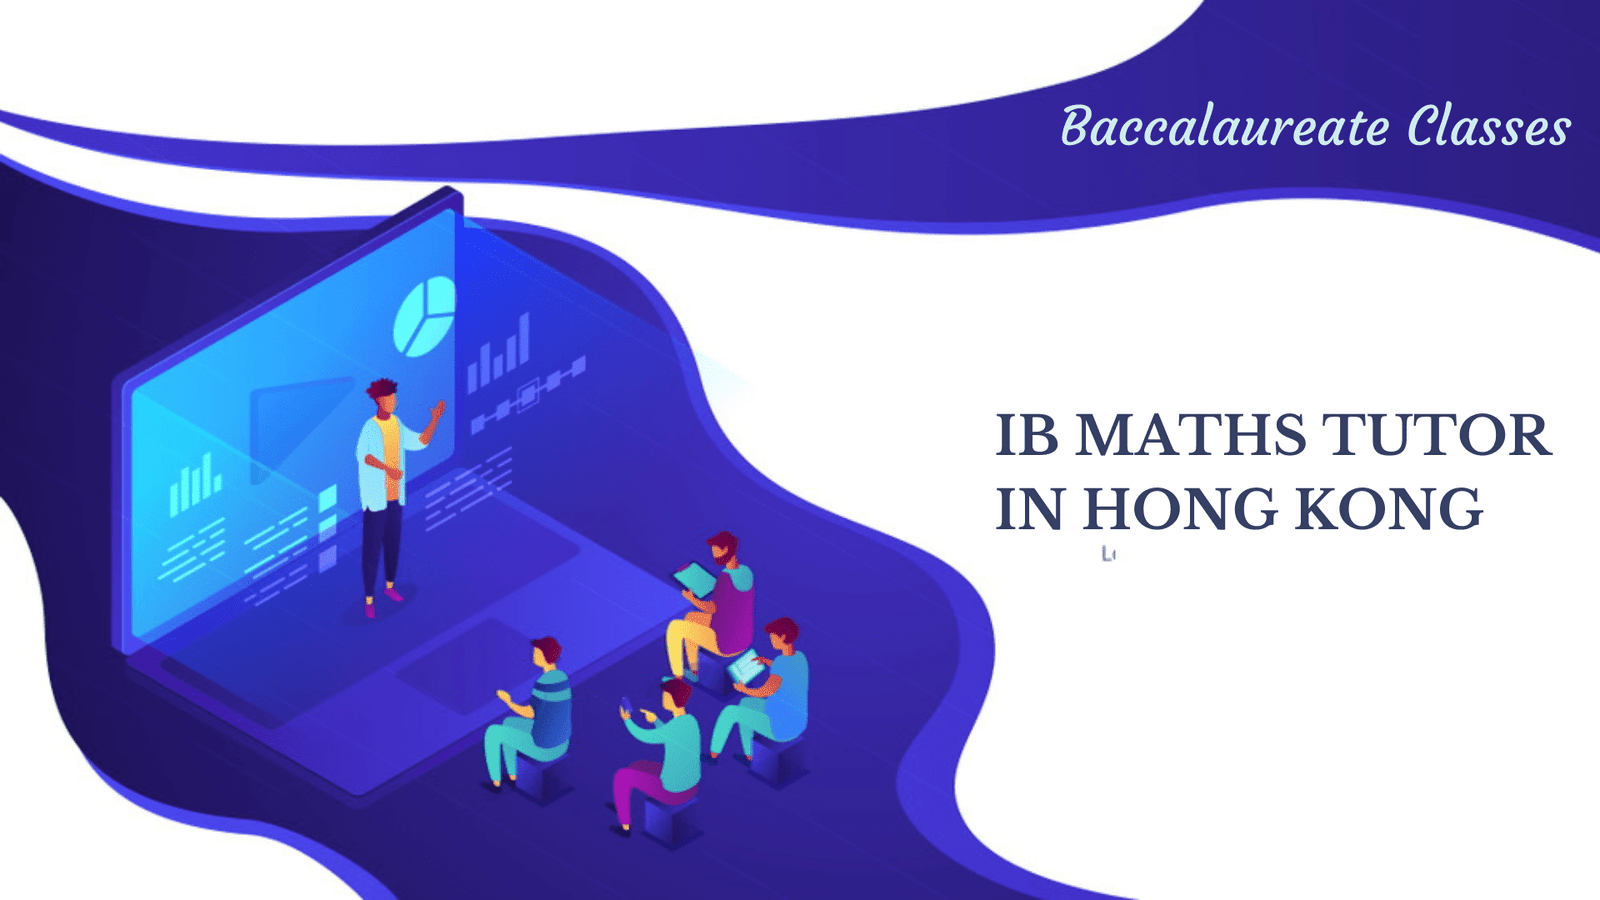 IB Maths Tutor in Hong Kong